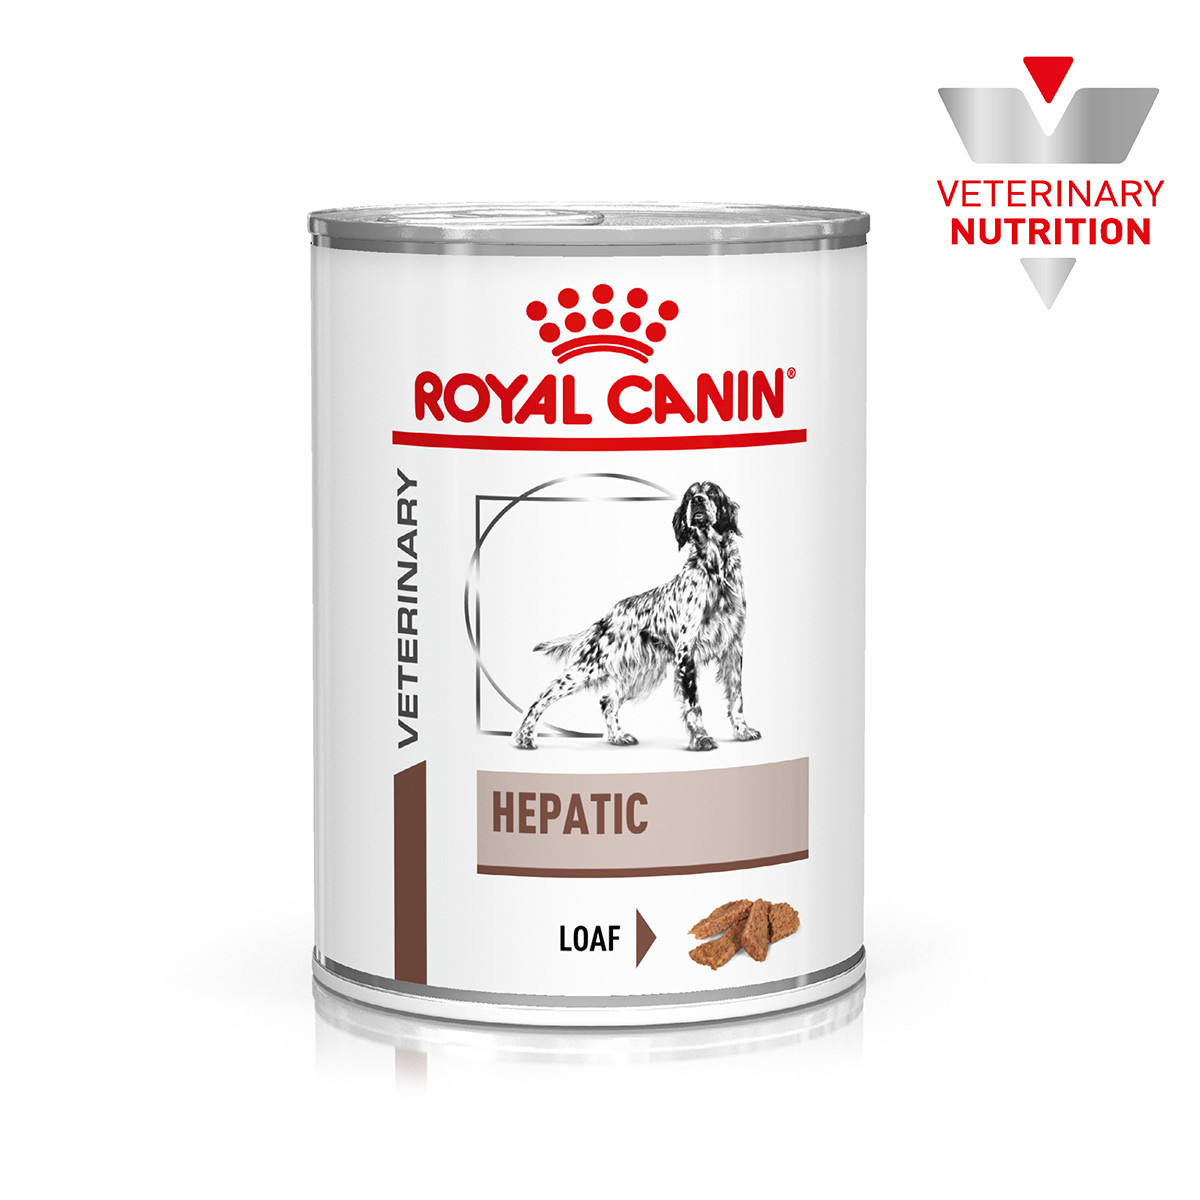 Вологий корм для дорослих собак ROYAL CANIN HEPATIC DOG Cans  0.42 кг, фото 1